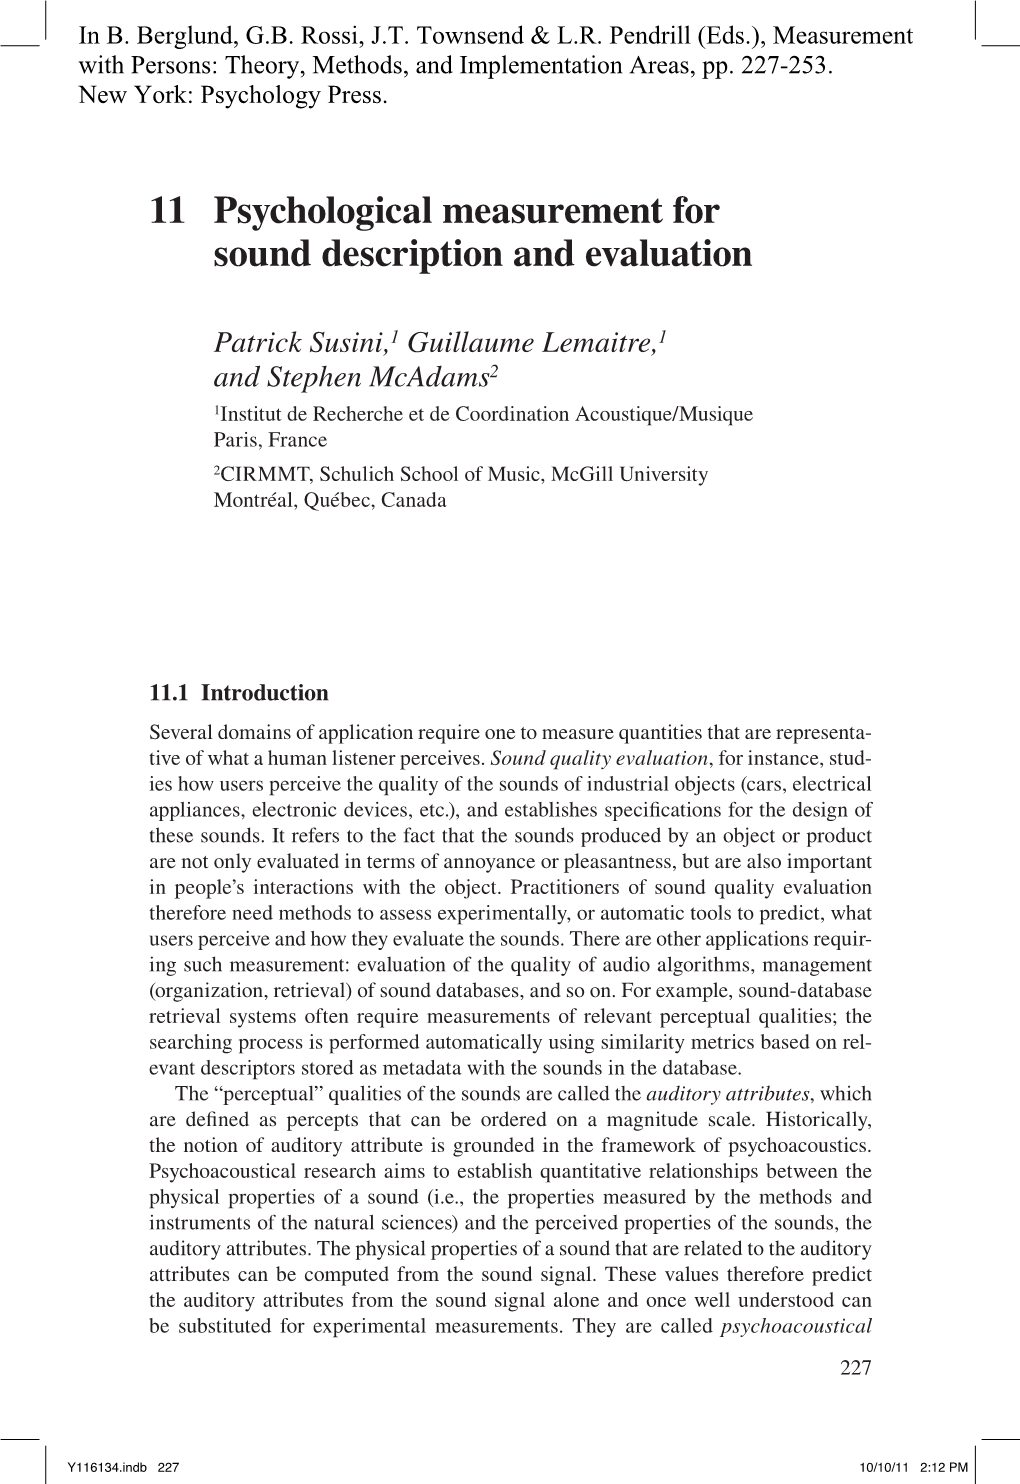 Psychological Measurement for Sound Description and Evaluation 11